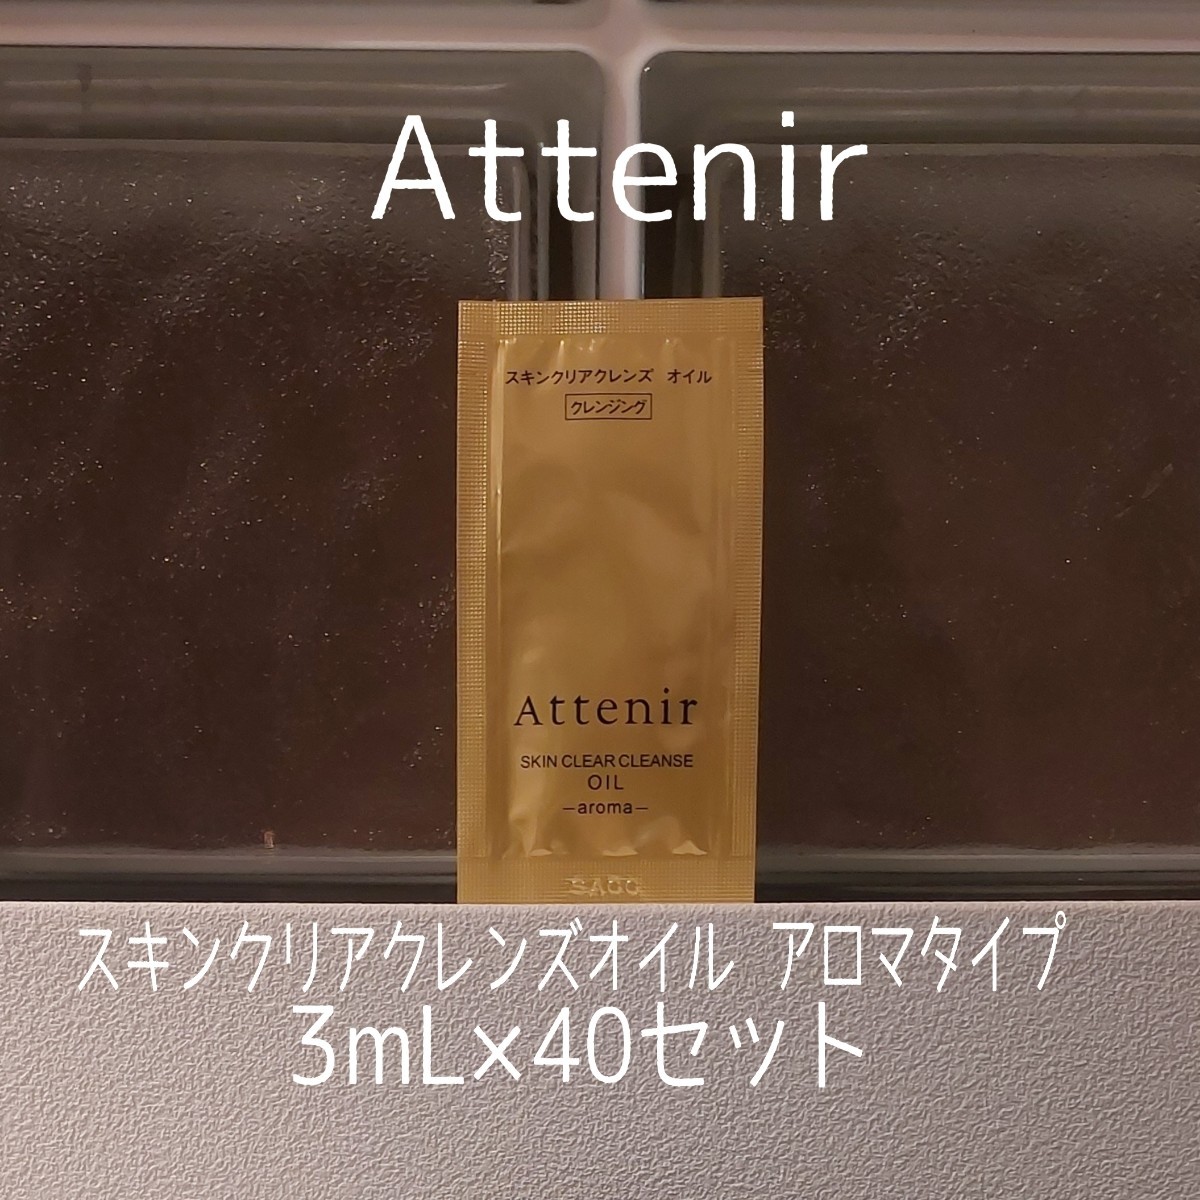  Attenir *s gold kli Acre nz масло 3ml×40 комплект * aroma модель * очищающее масло *MAQUIA дополнение *